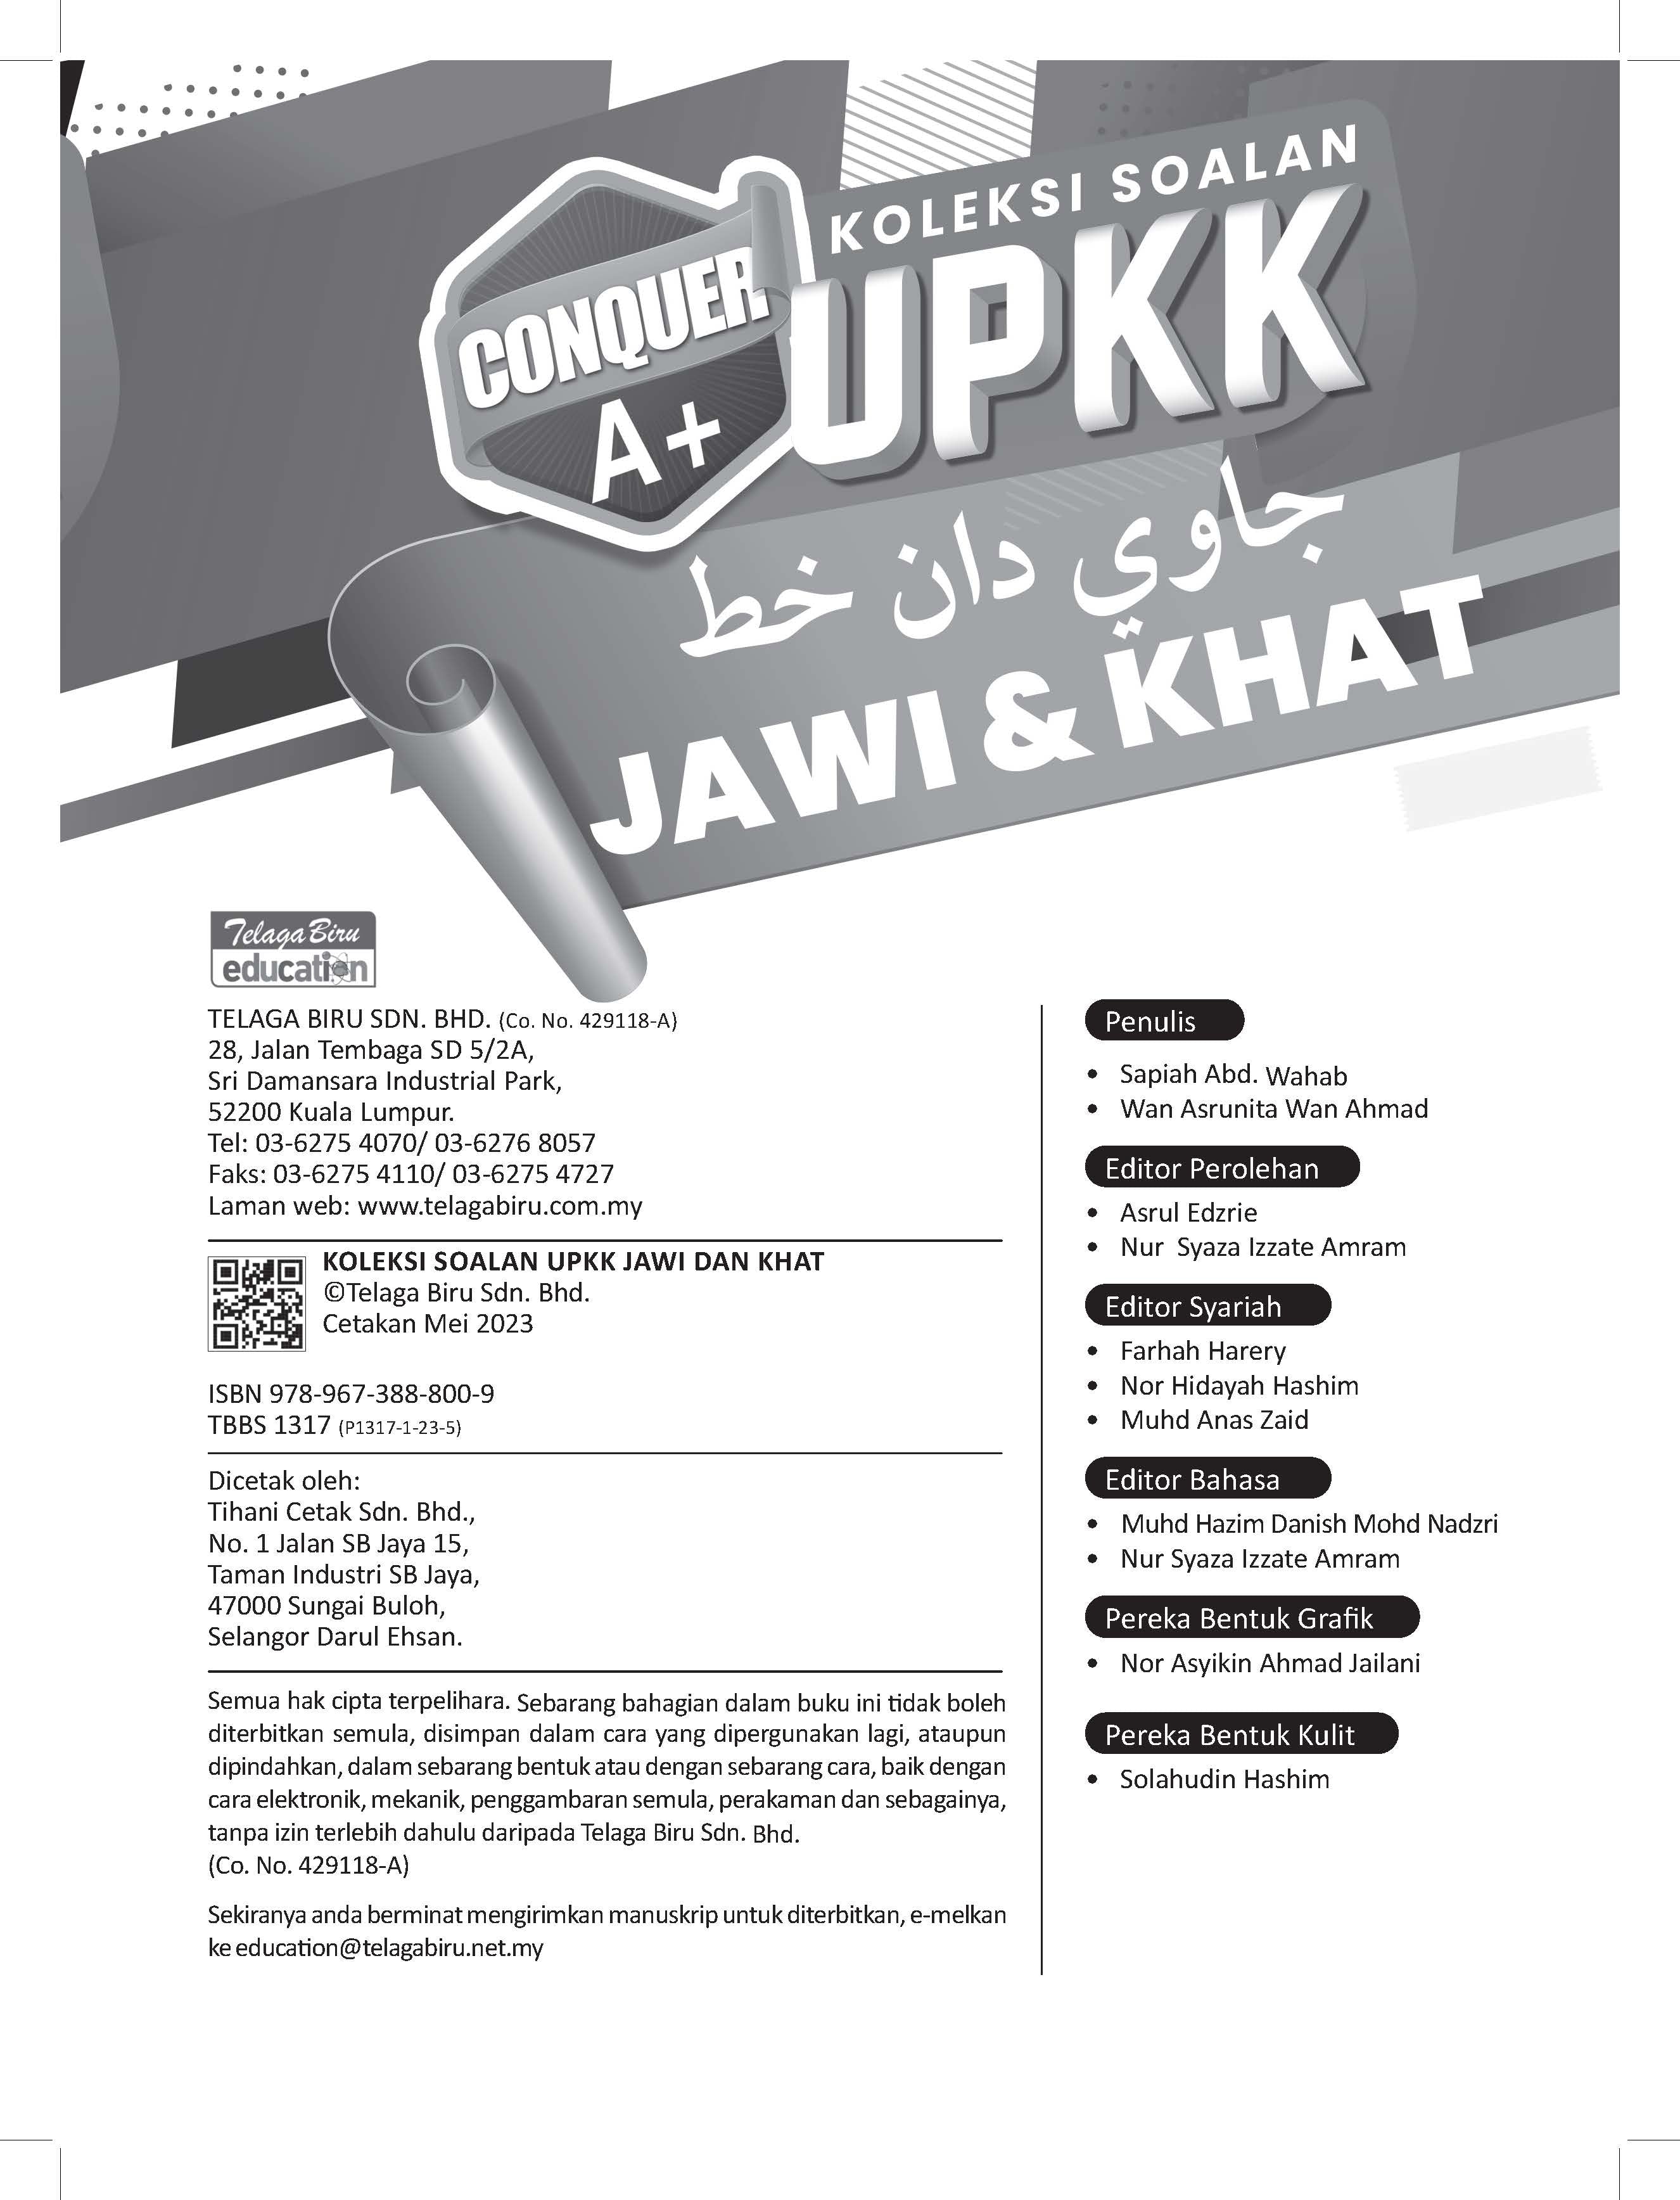 Conquer A+ Koleksi Soalan UPKK (Jawi & Khat) - (TBBS1317)